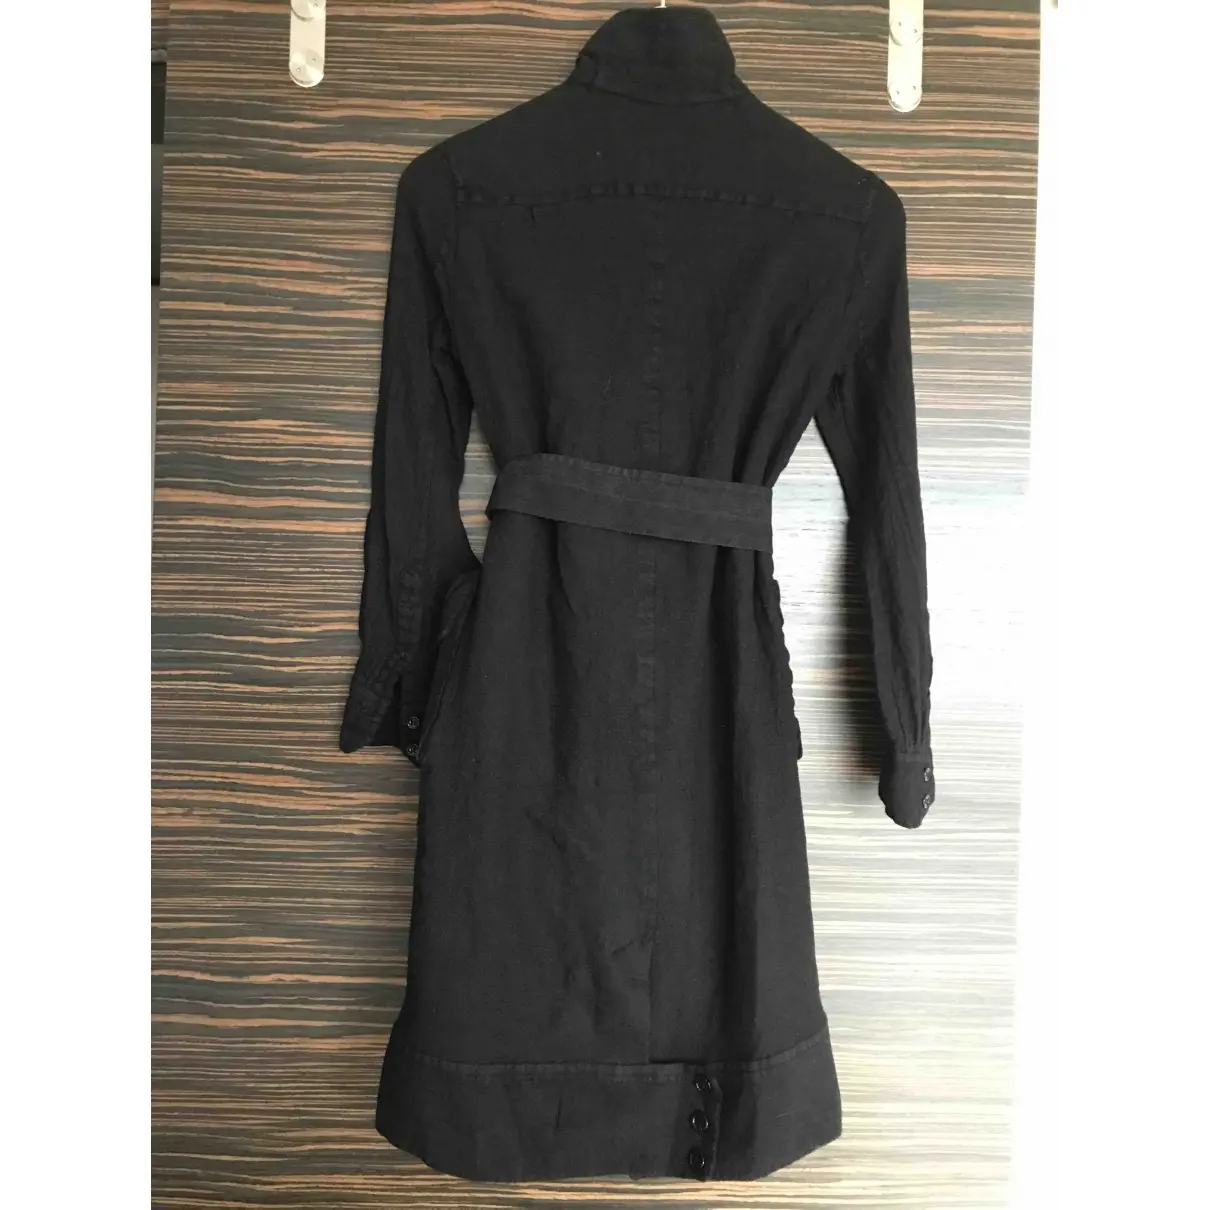 Yves Saint Laurent Wool dress for sale - Vintage